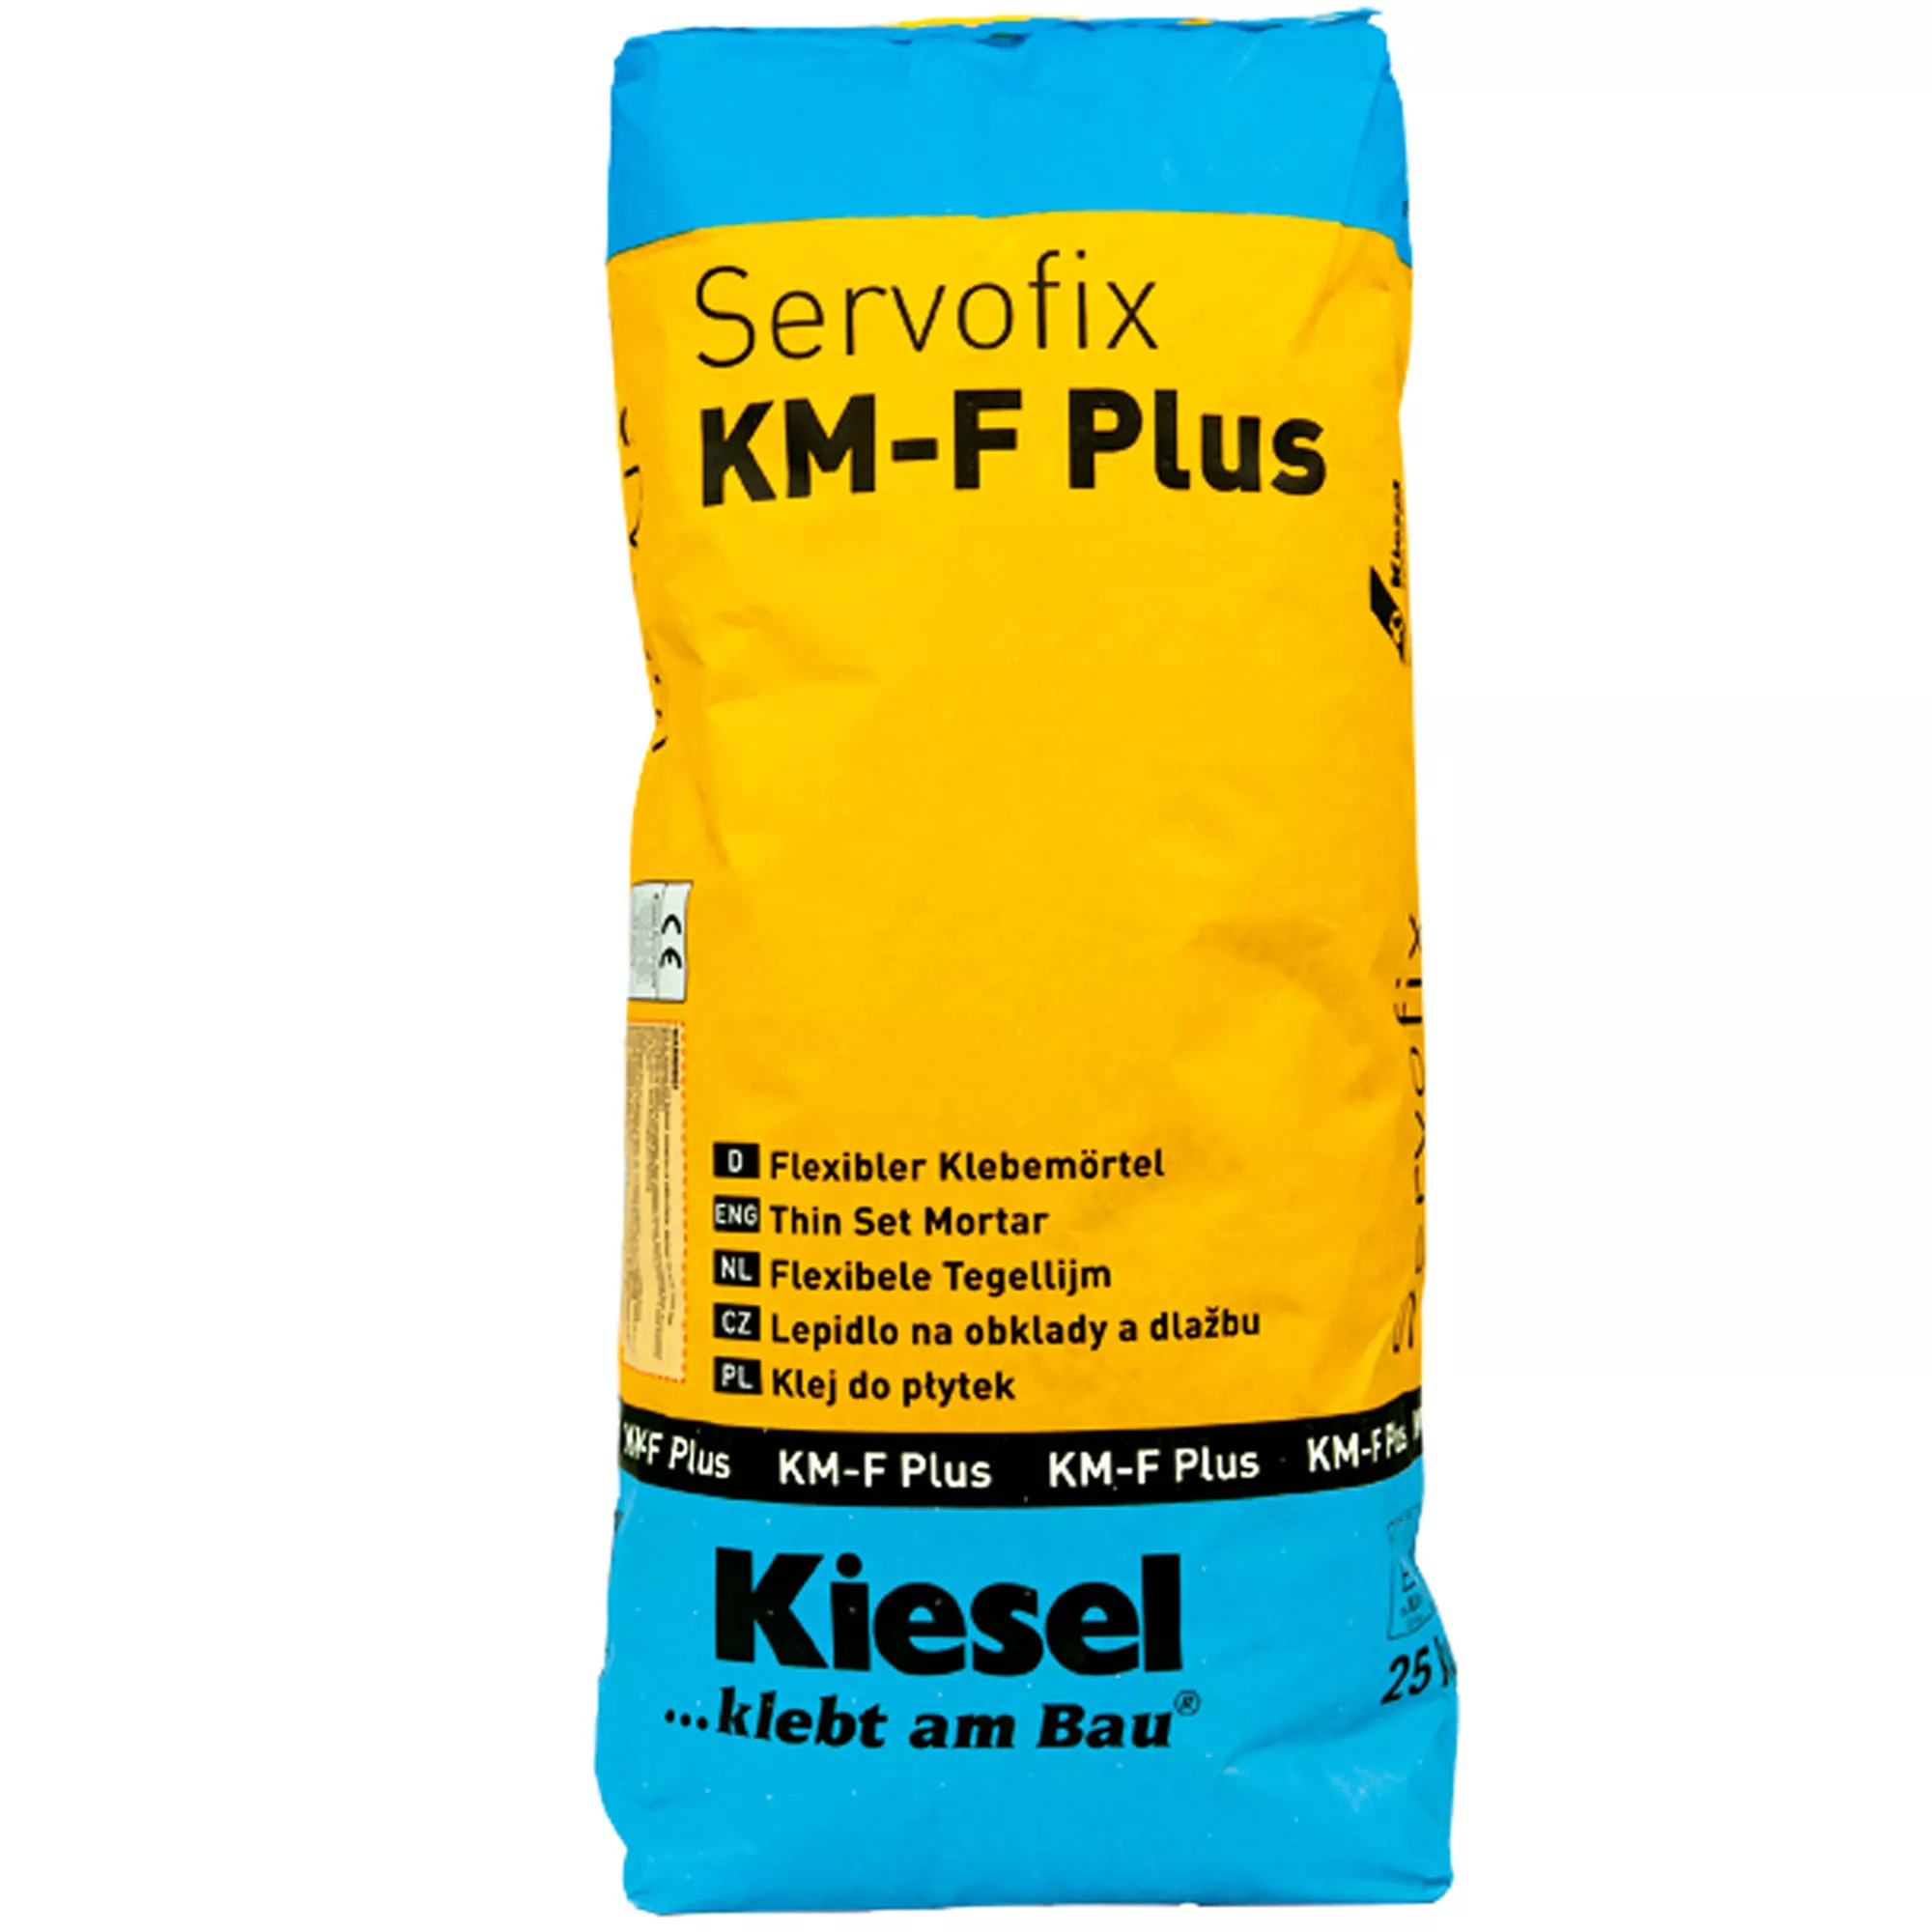 Adesivo para azulejos Kiesel Servofix KM-F Plus - argamassa adesiva flexível 25 kg